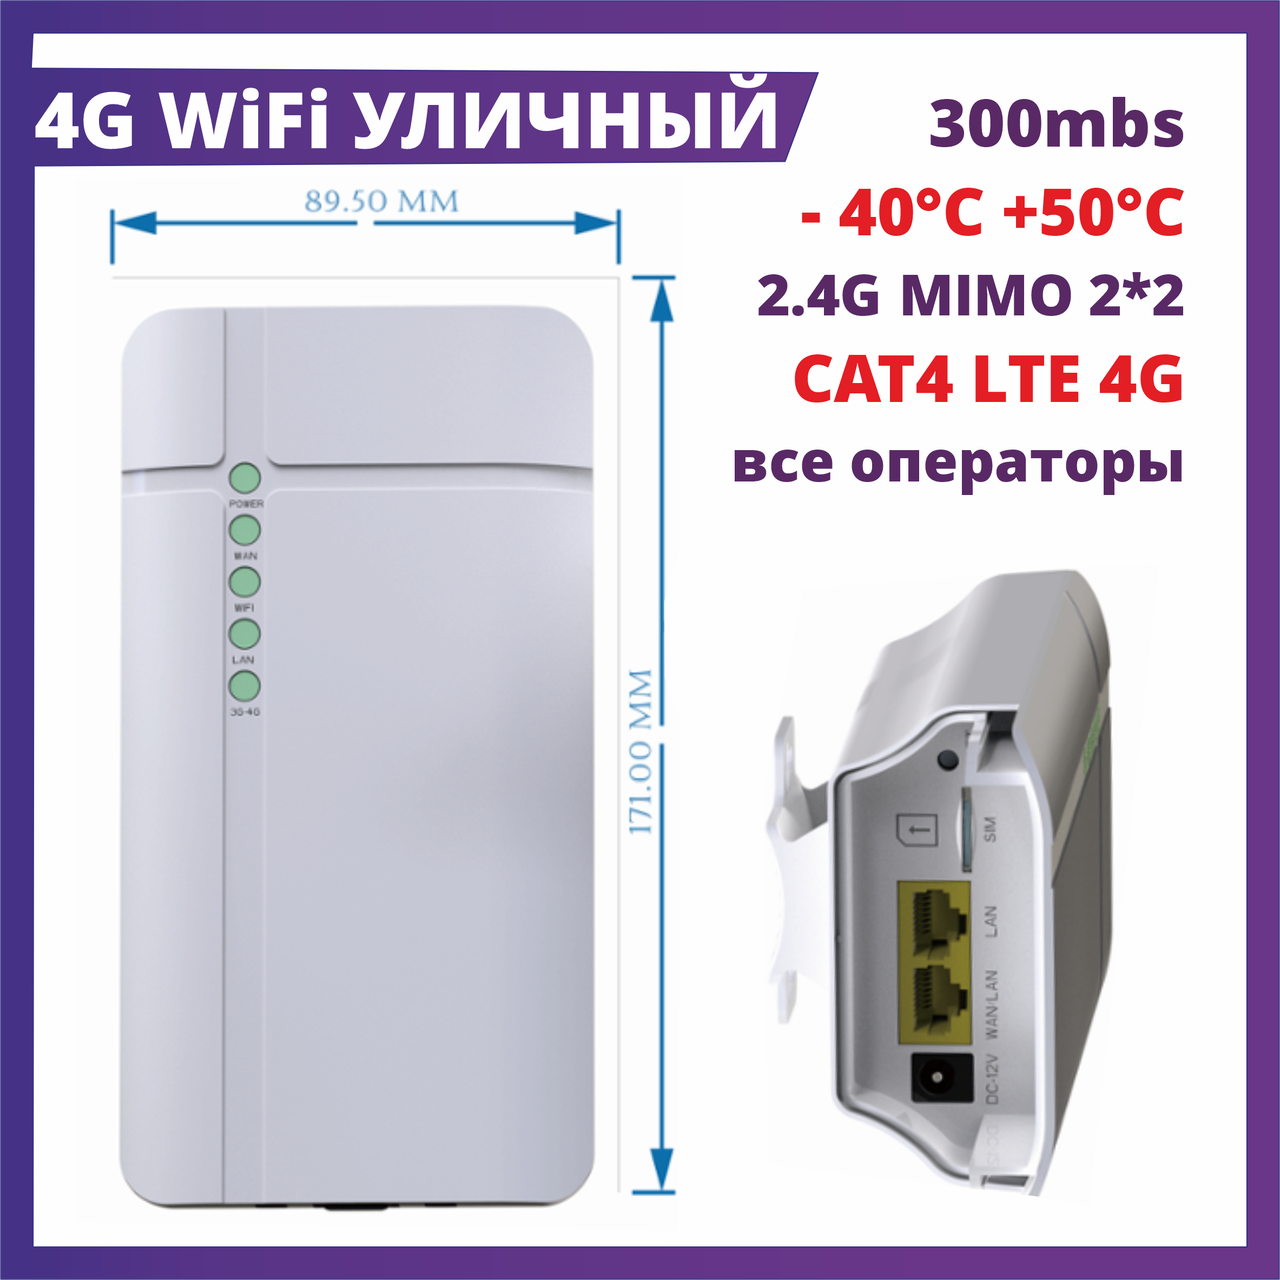 Уличный модем роутер 4G 3G LTE WiFi  беспроводной 300 мб/с SIM карты СИМ Tele2 Билайн Актив Kcell Altel, фото 1